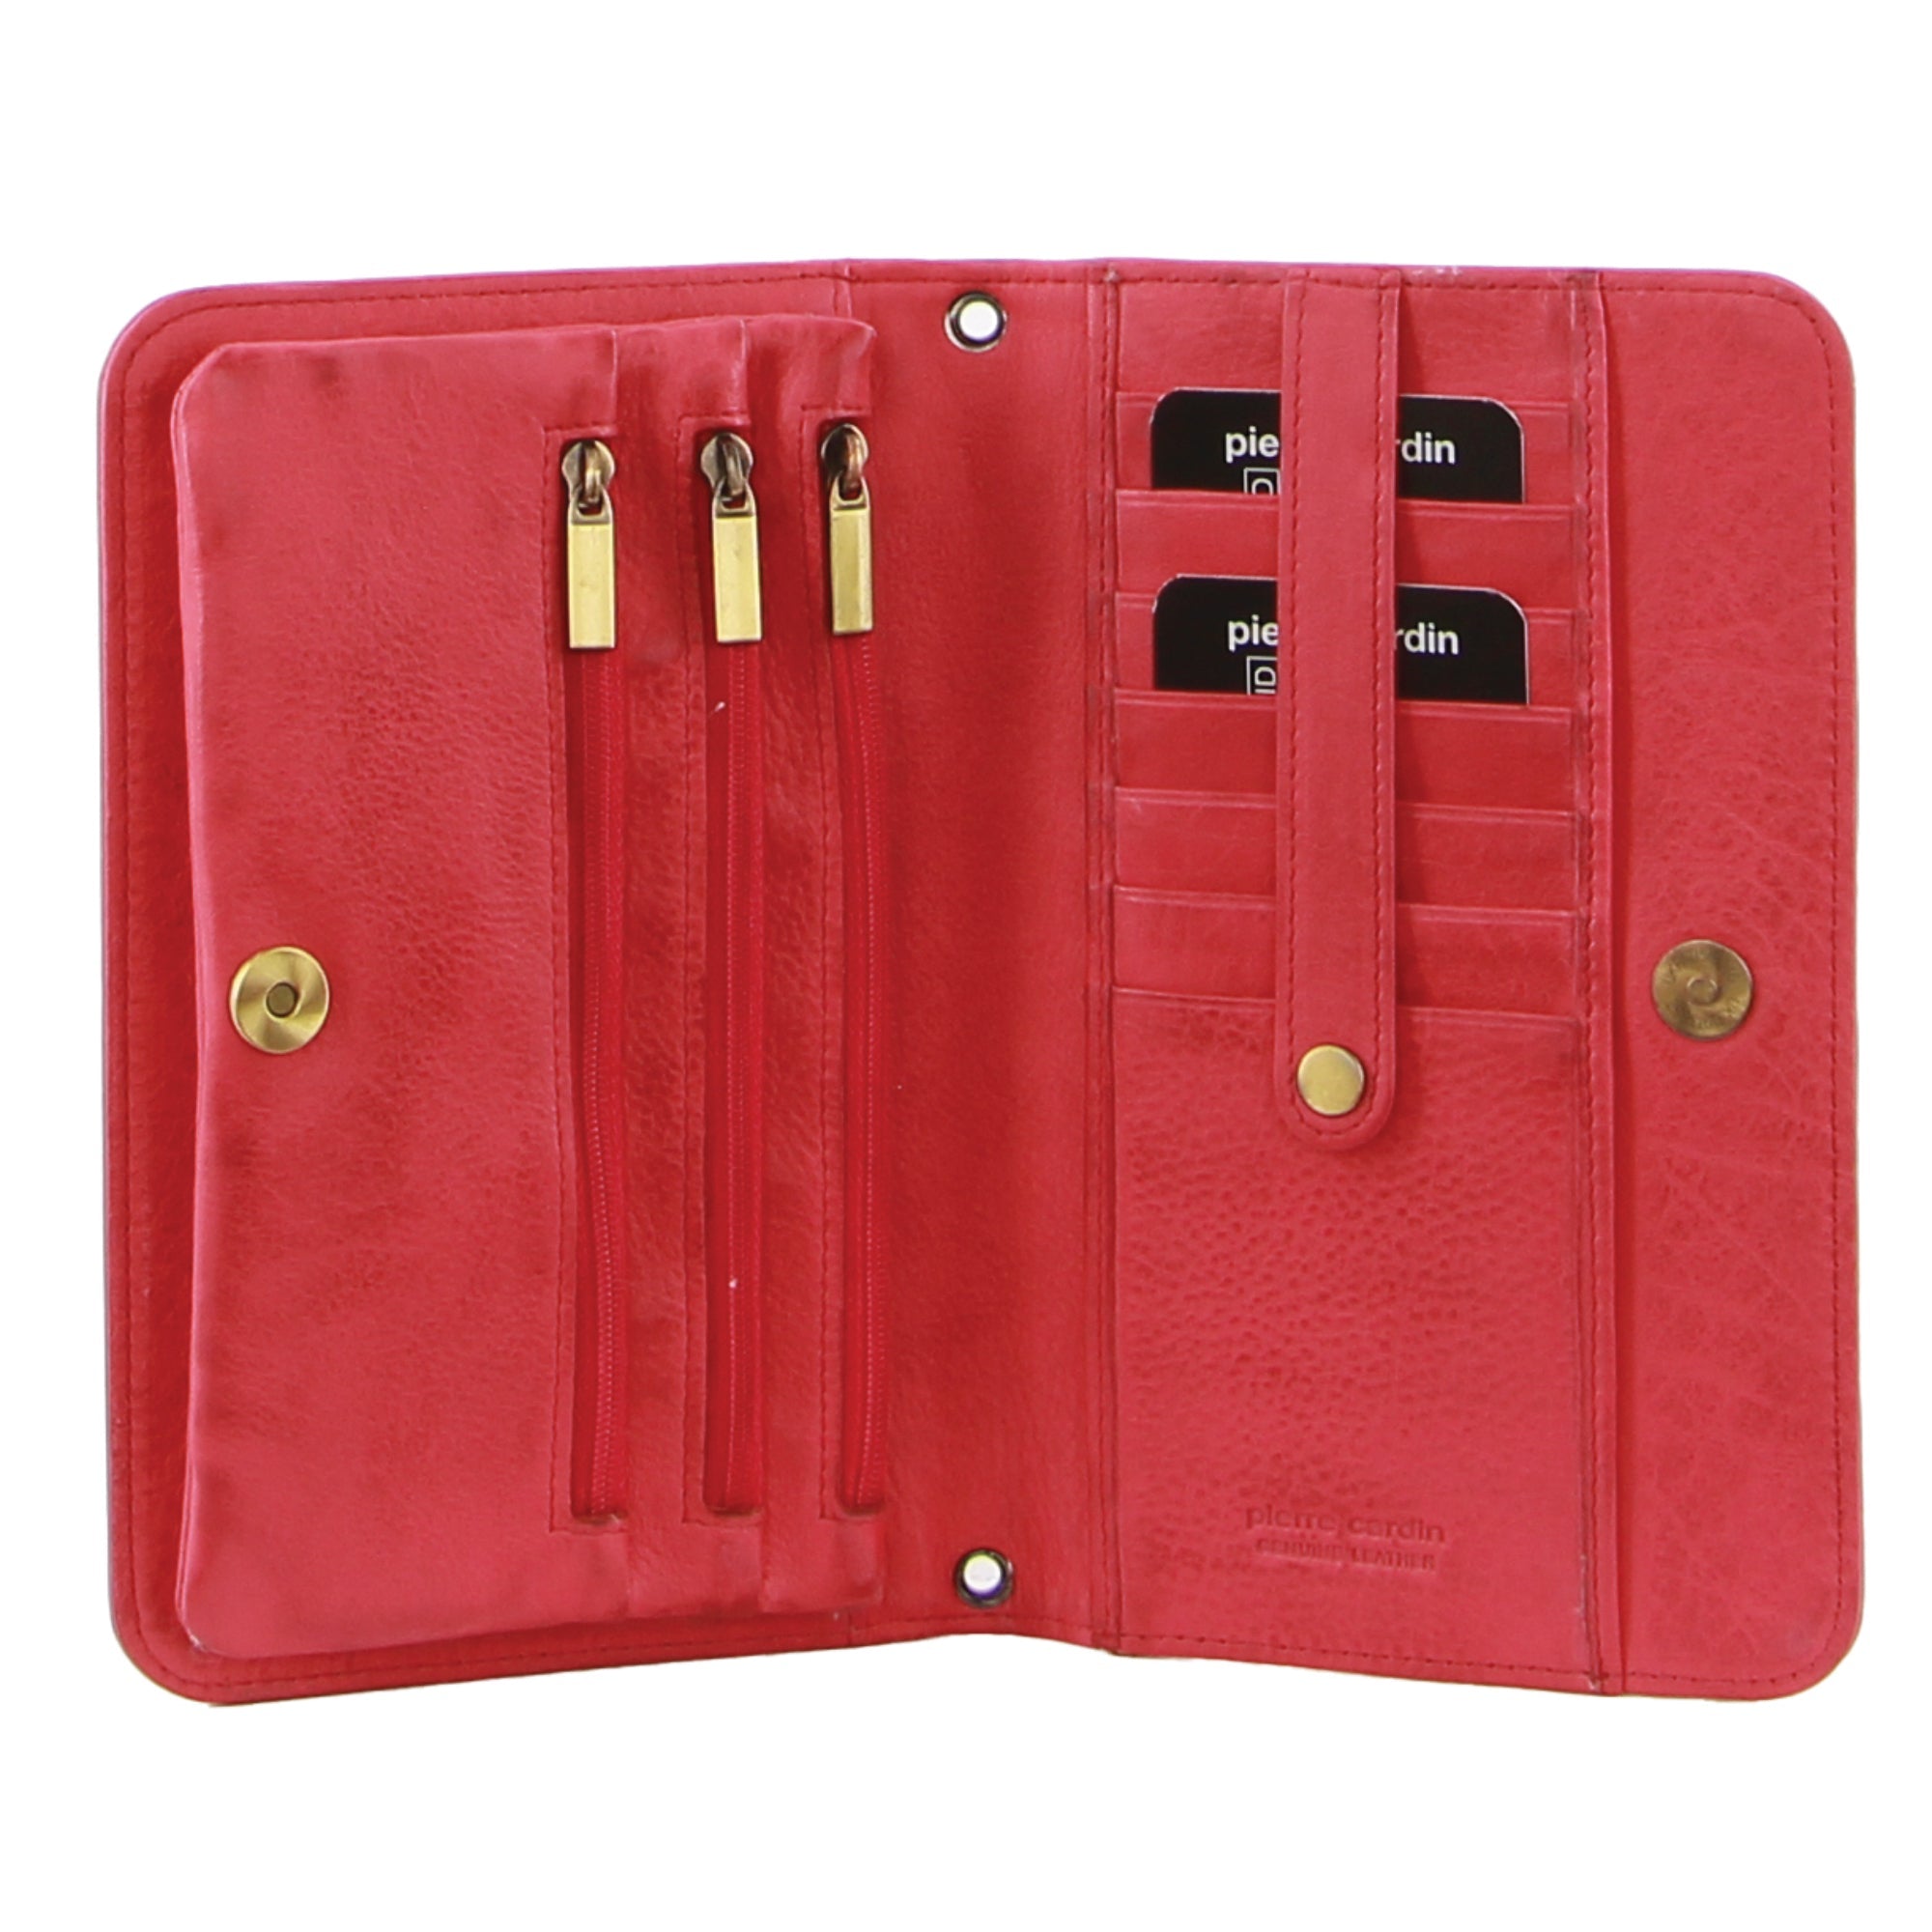 Pierre Cardin Genuine Leather Clutch/Wallet Bag in Pink